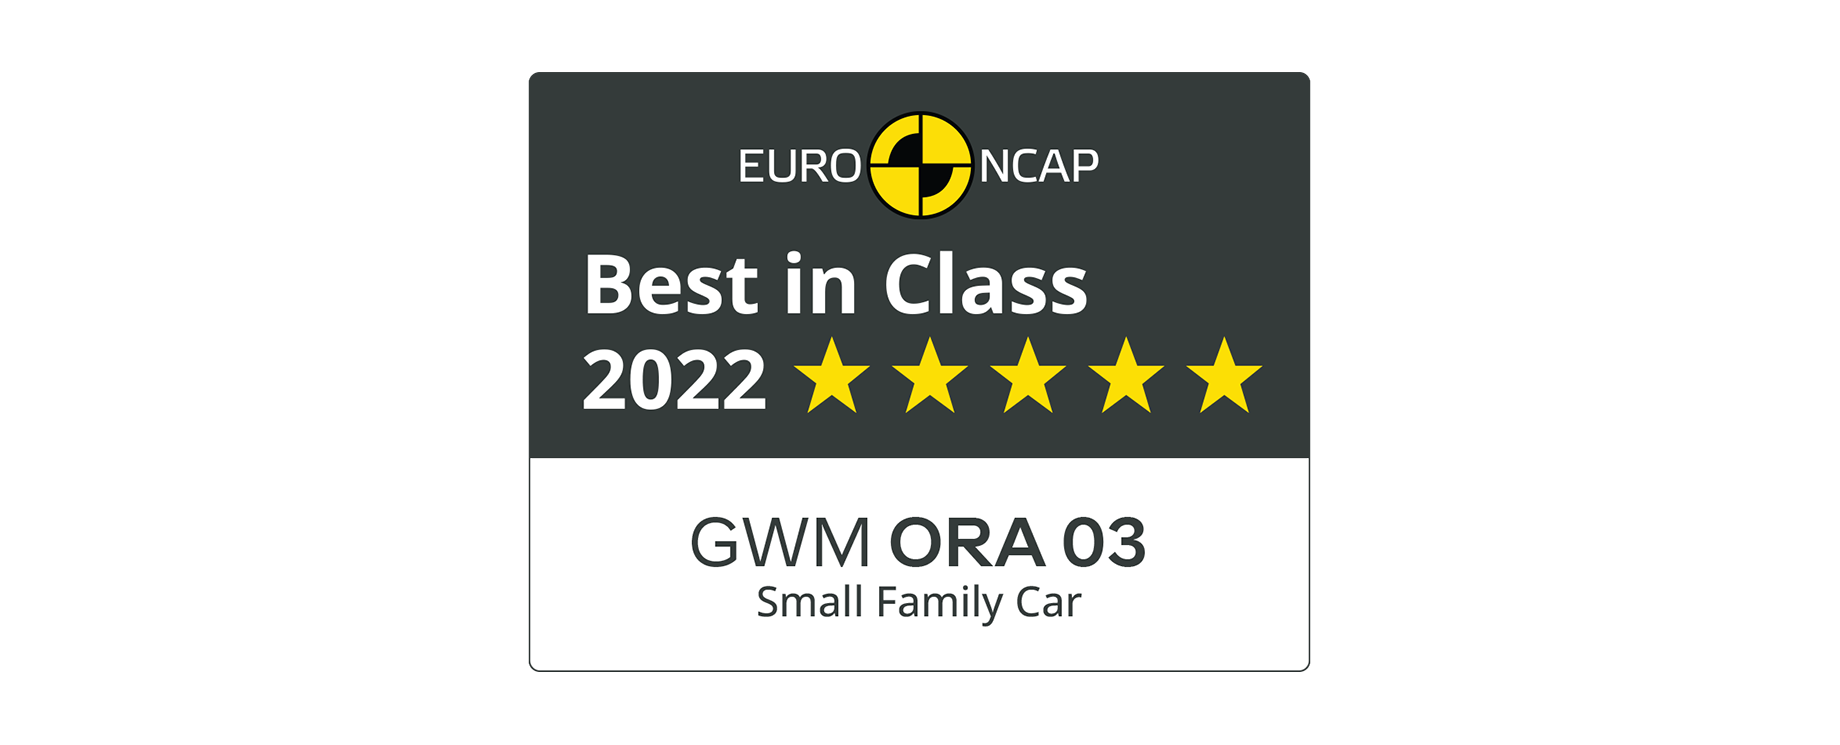 euro ncap logo best in class